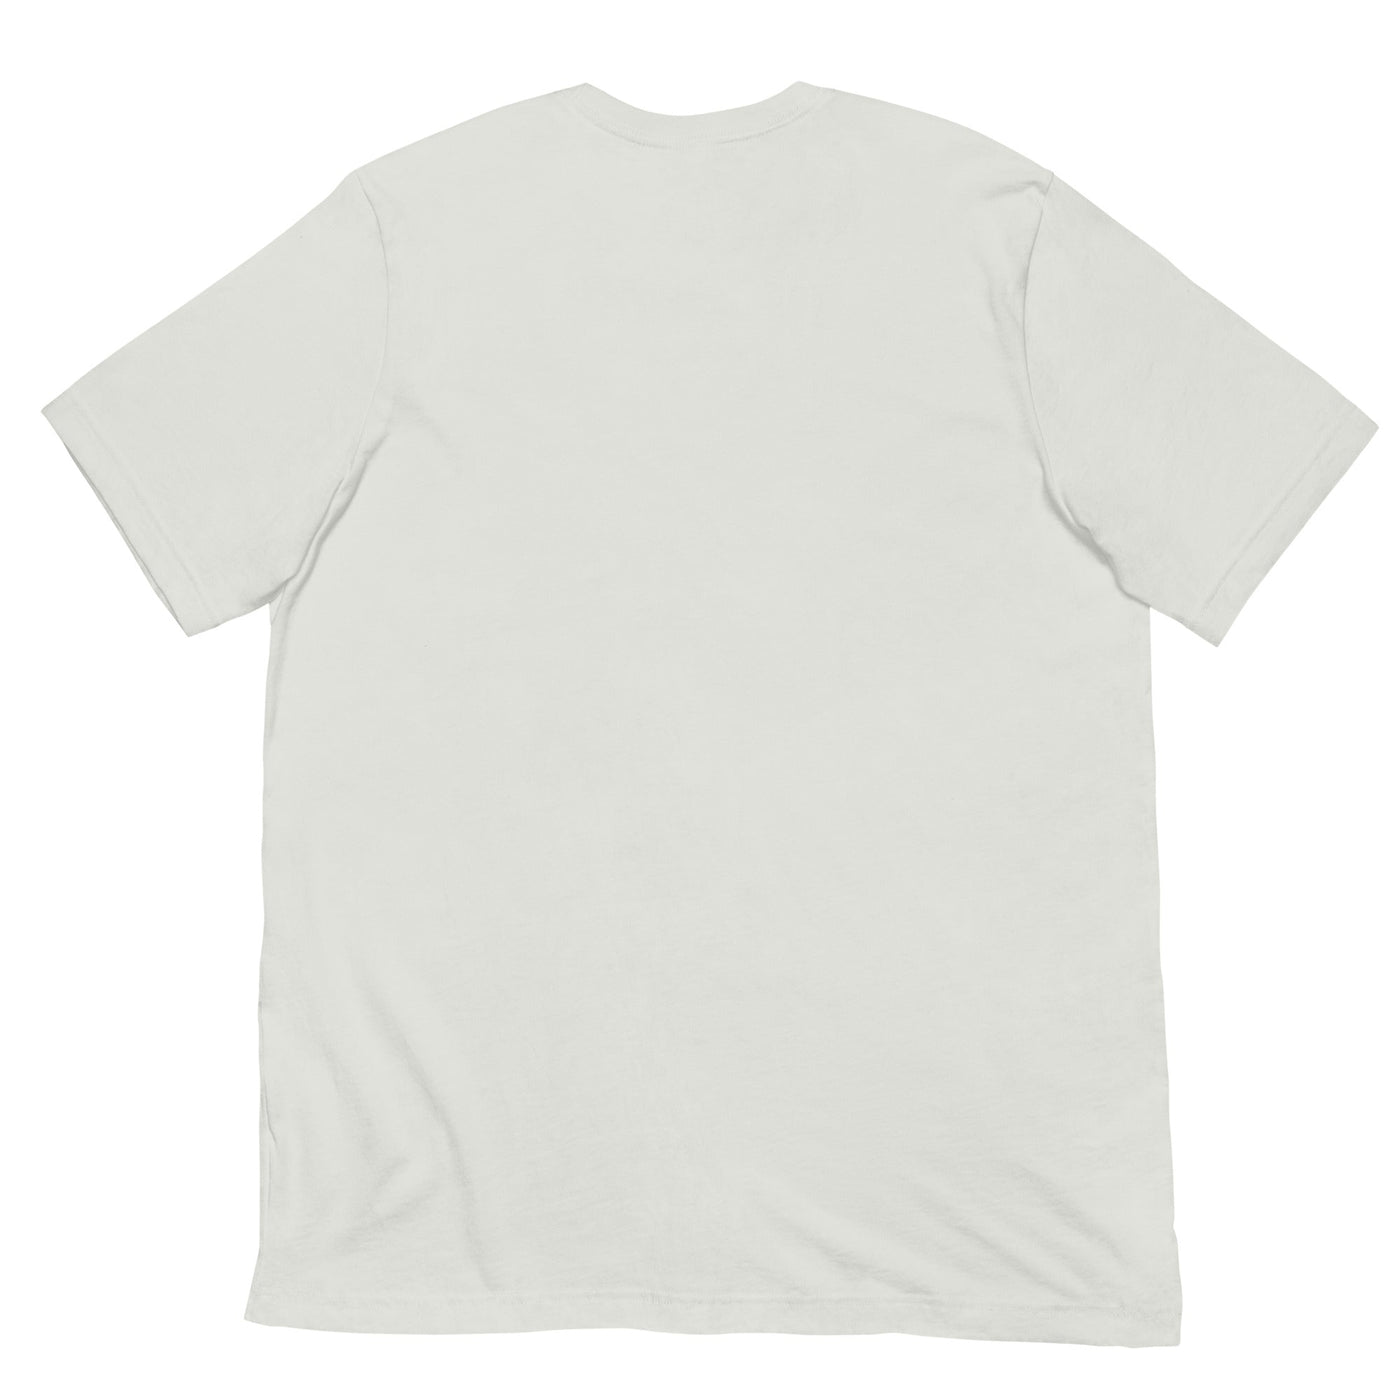 Lake Mead + Get Your Own Dam Shirt, T-Shirt - Ezra's Clothing